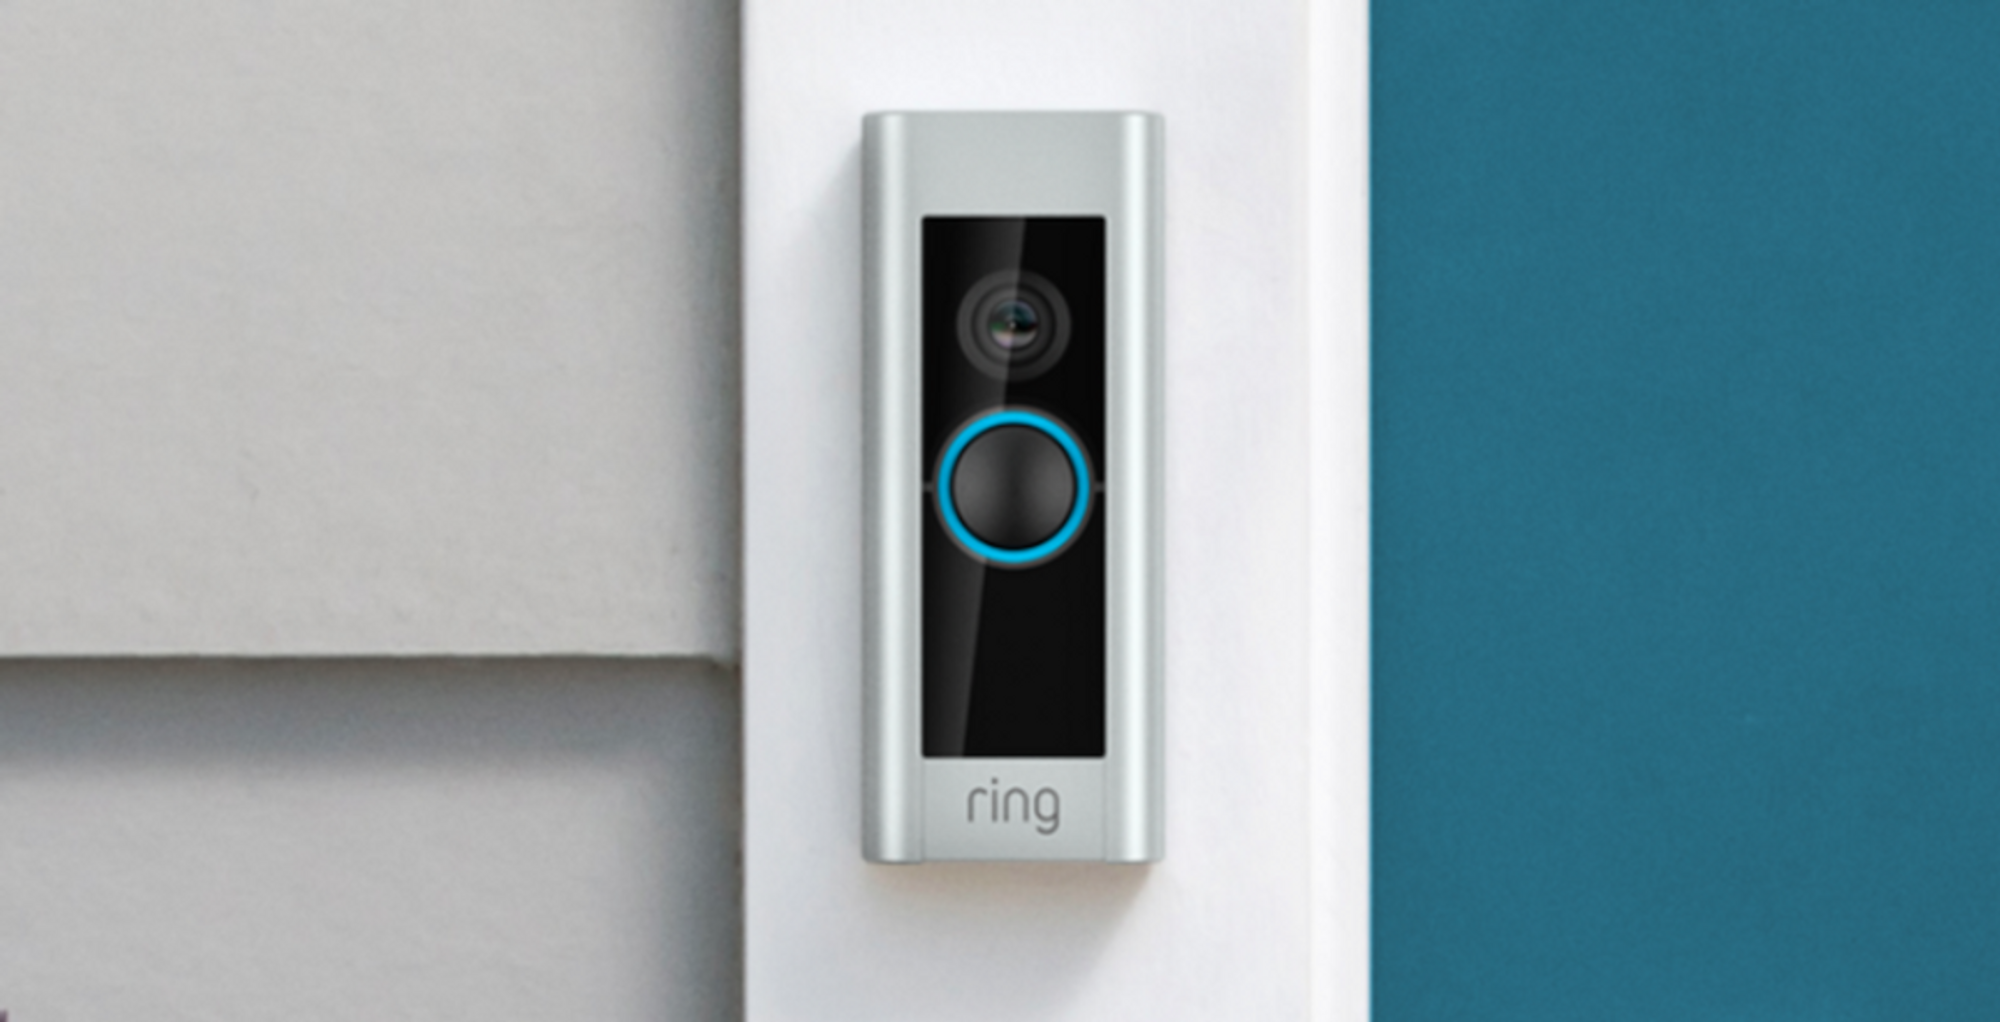 Does ring doorbell work with Apple HomeKit?